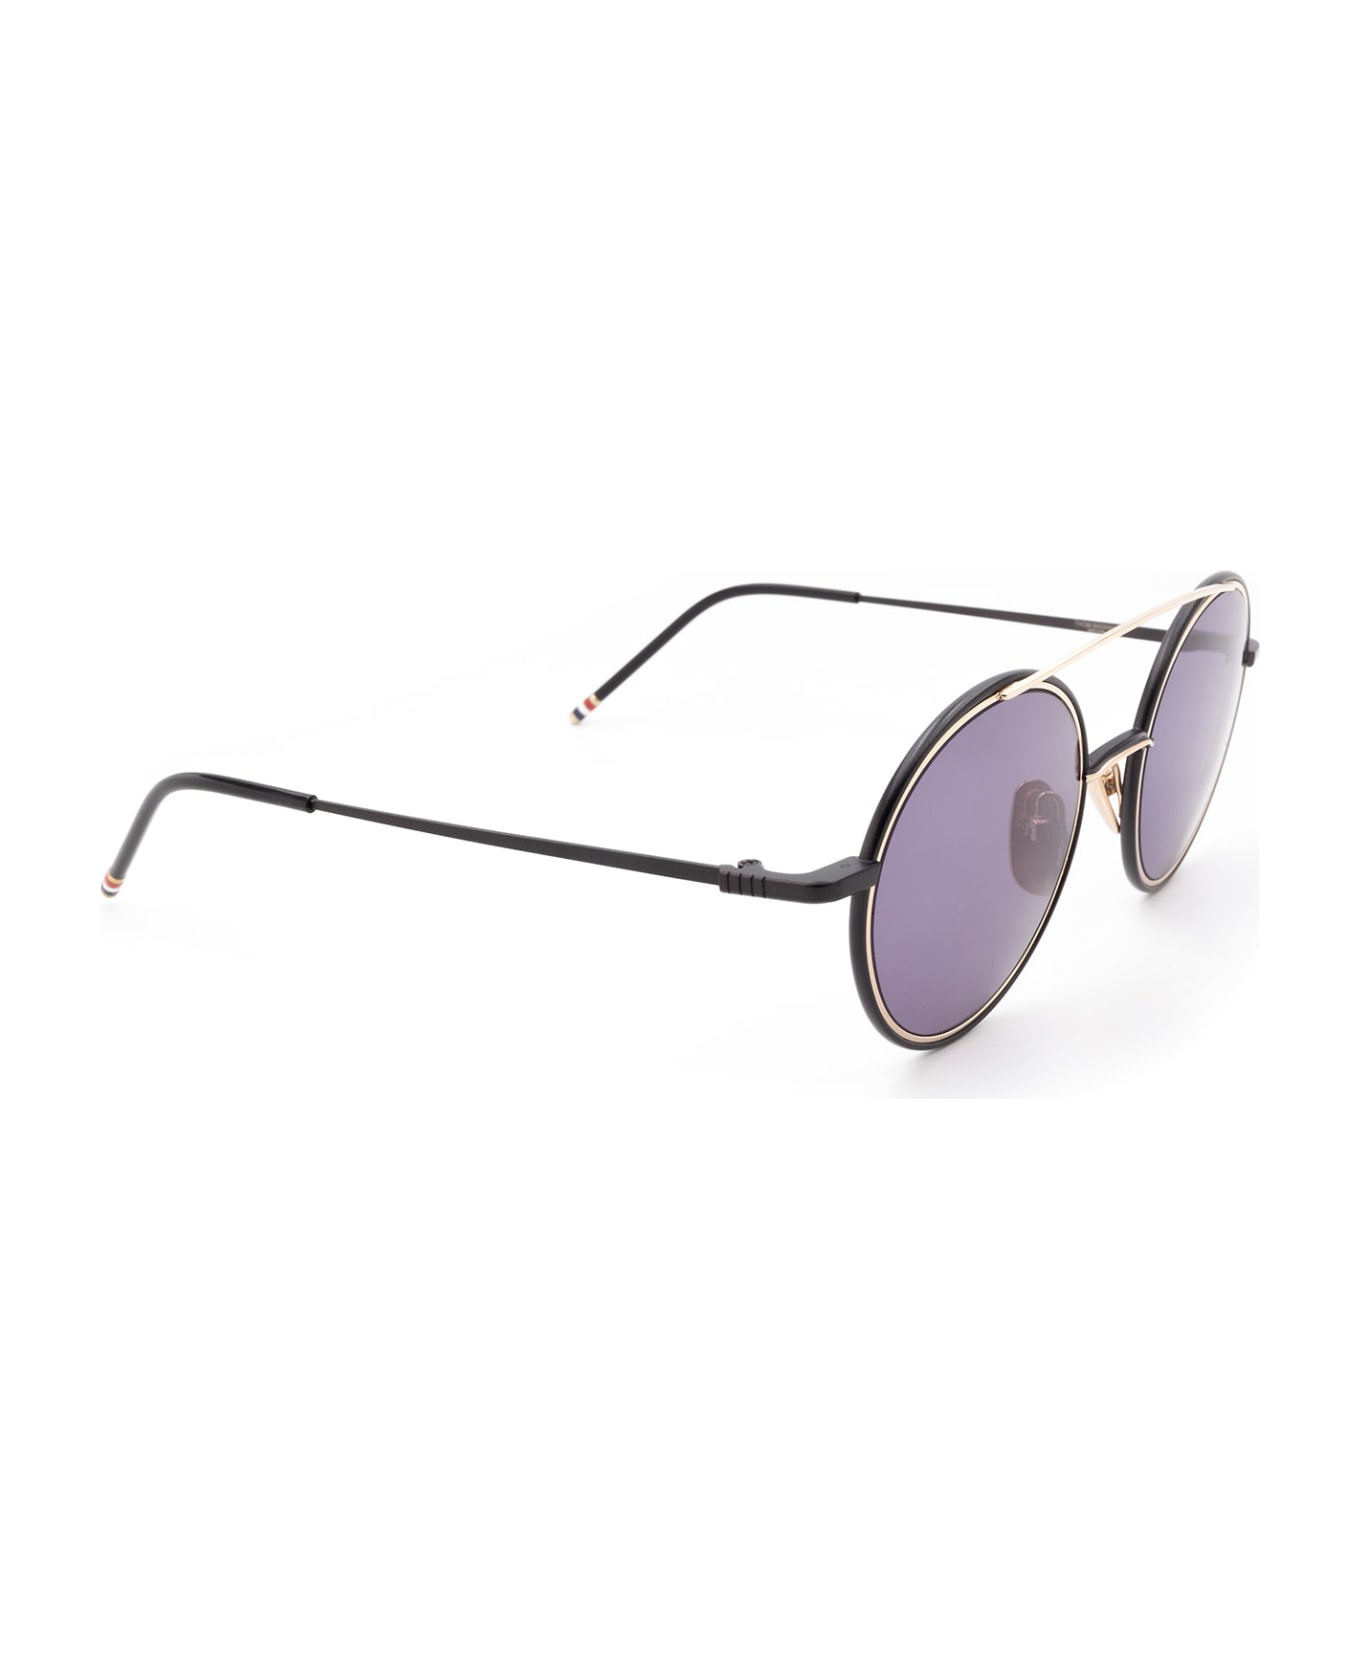 Thom Browne Tb108 A-t-blk-gld Sunglasses - A-T-BLK-GLD